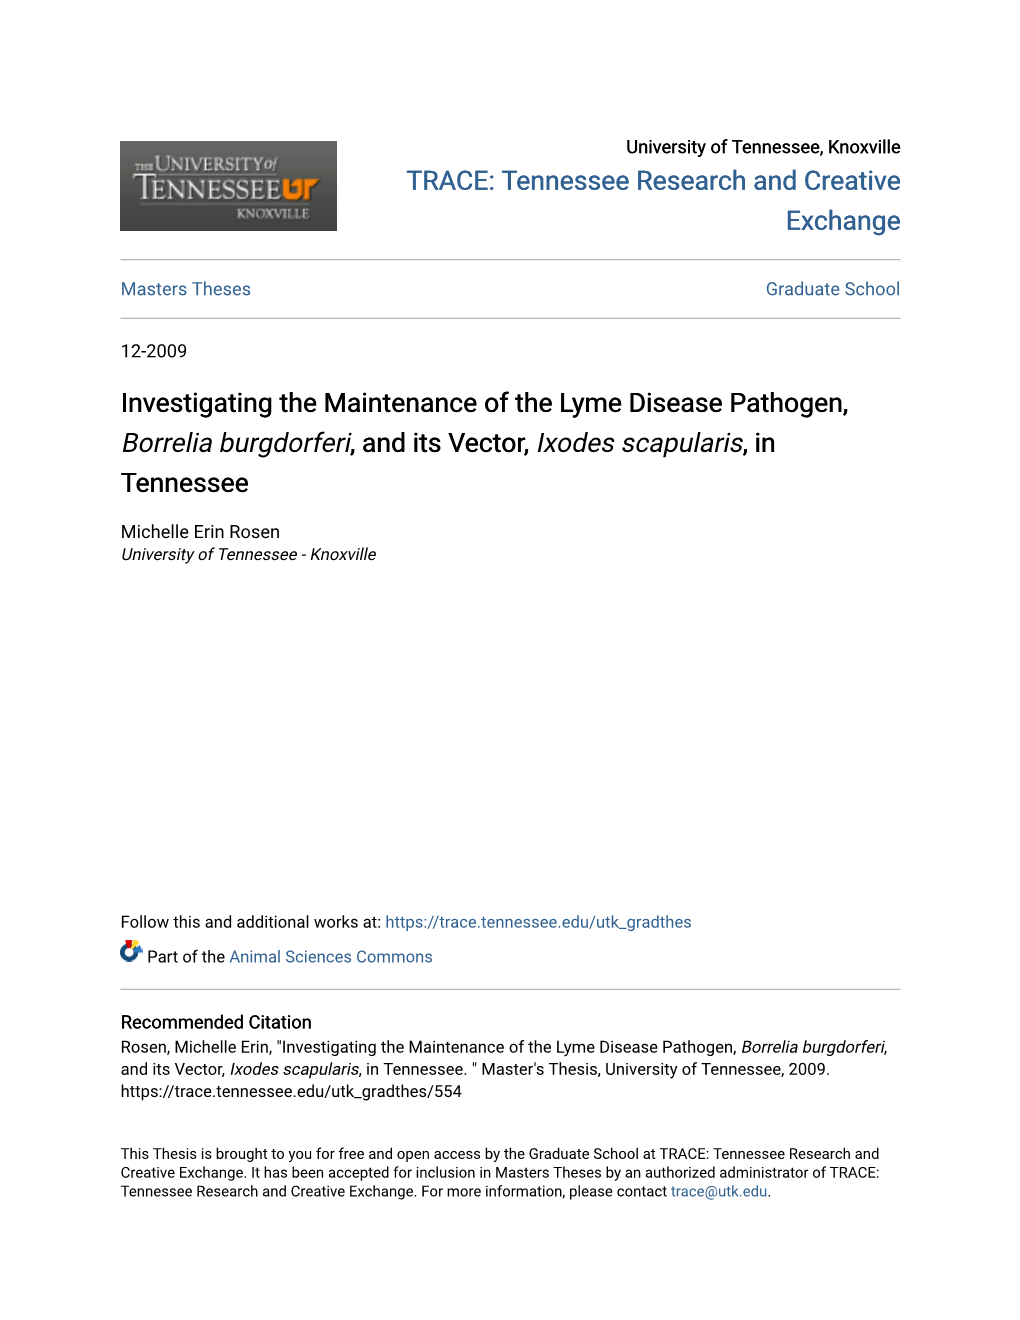 Lyme Disease Pathogen, Borrelia Burgdorferi, and Its Vector, Ixodes Scapularis, in Tennessee